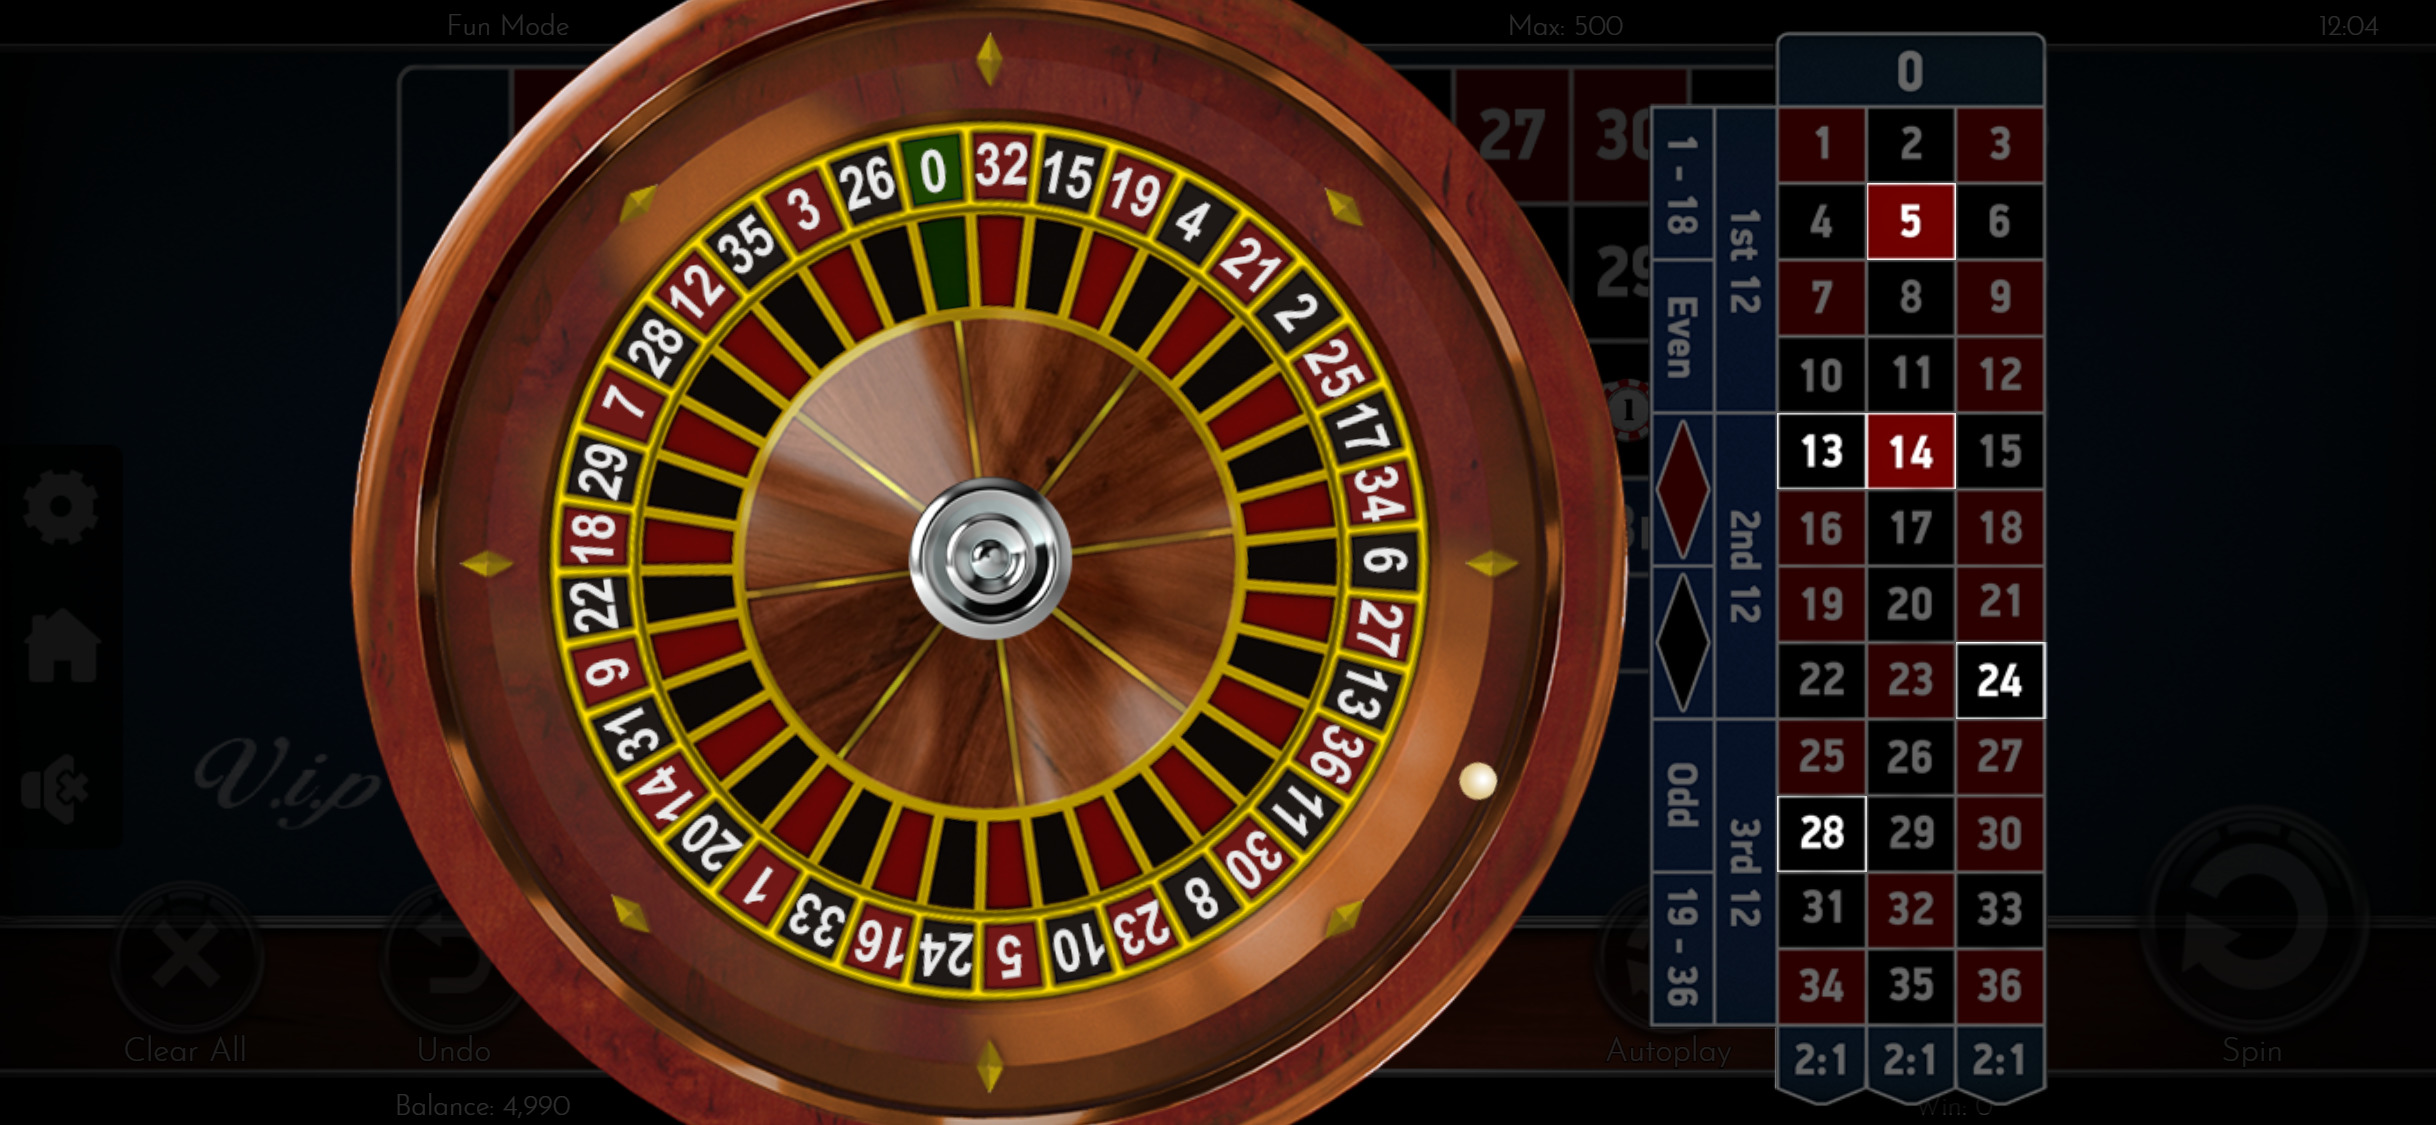 BetChain Casino Mobile Casino Games Review